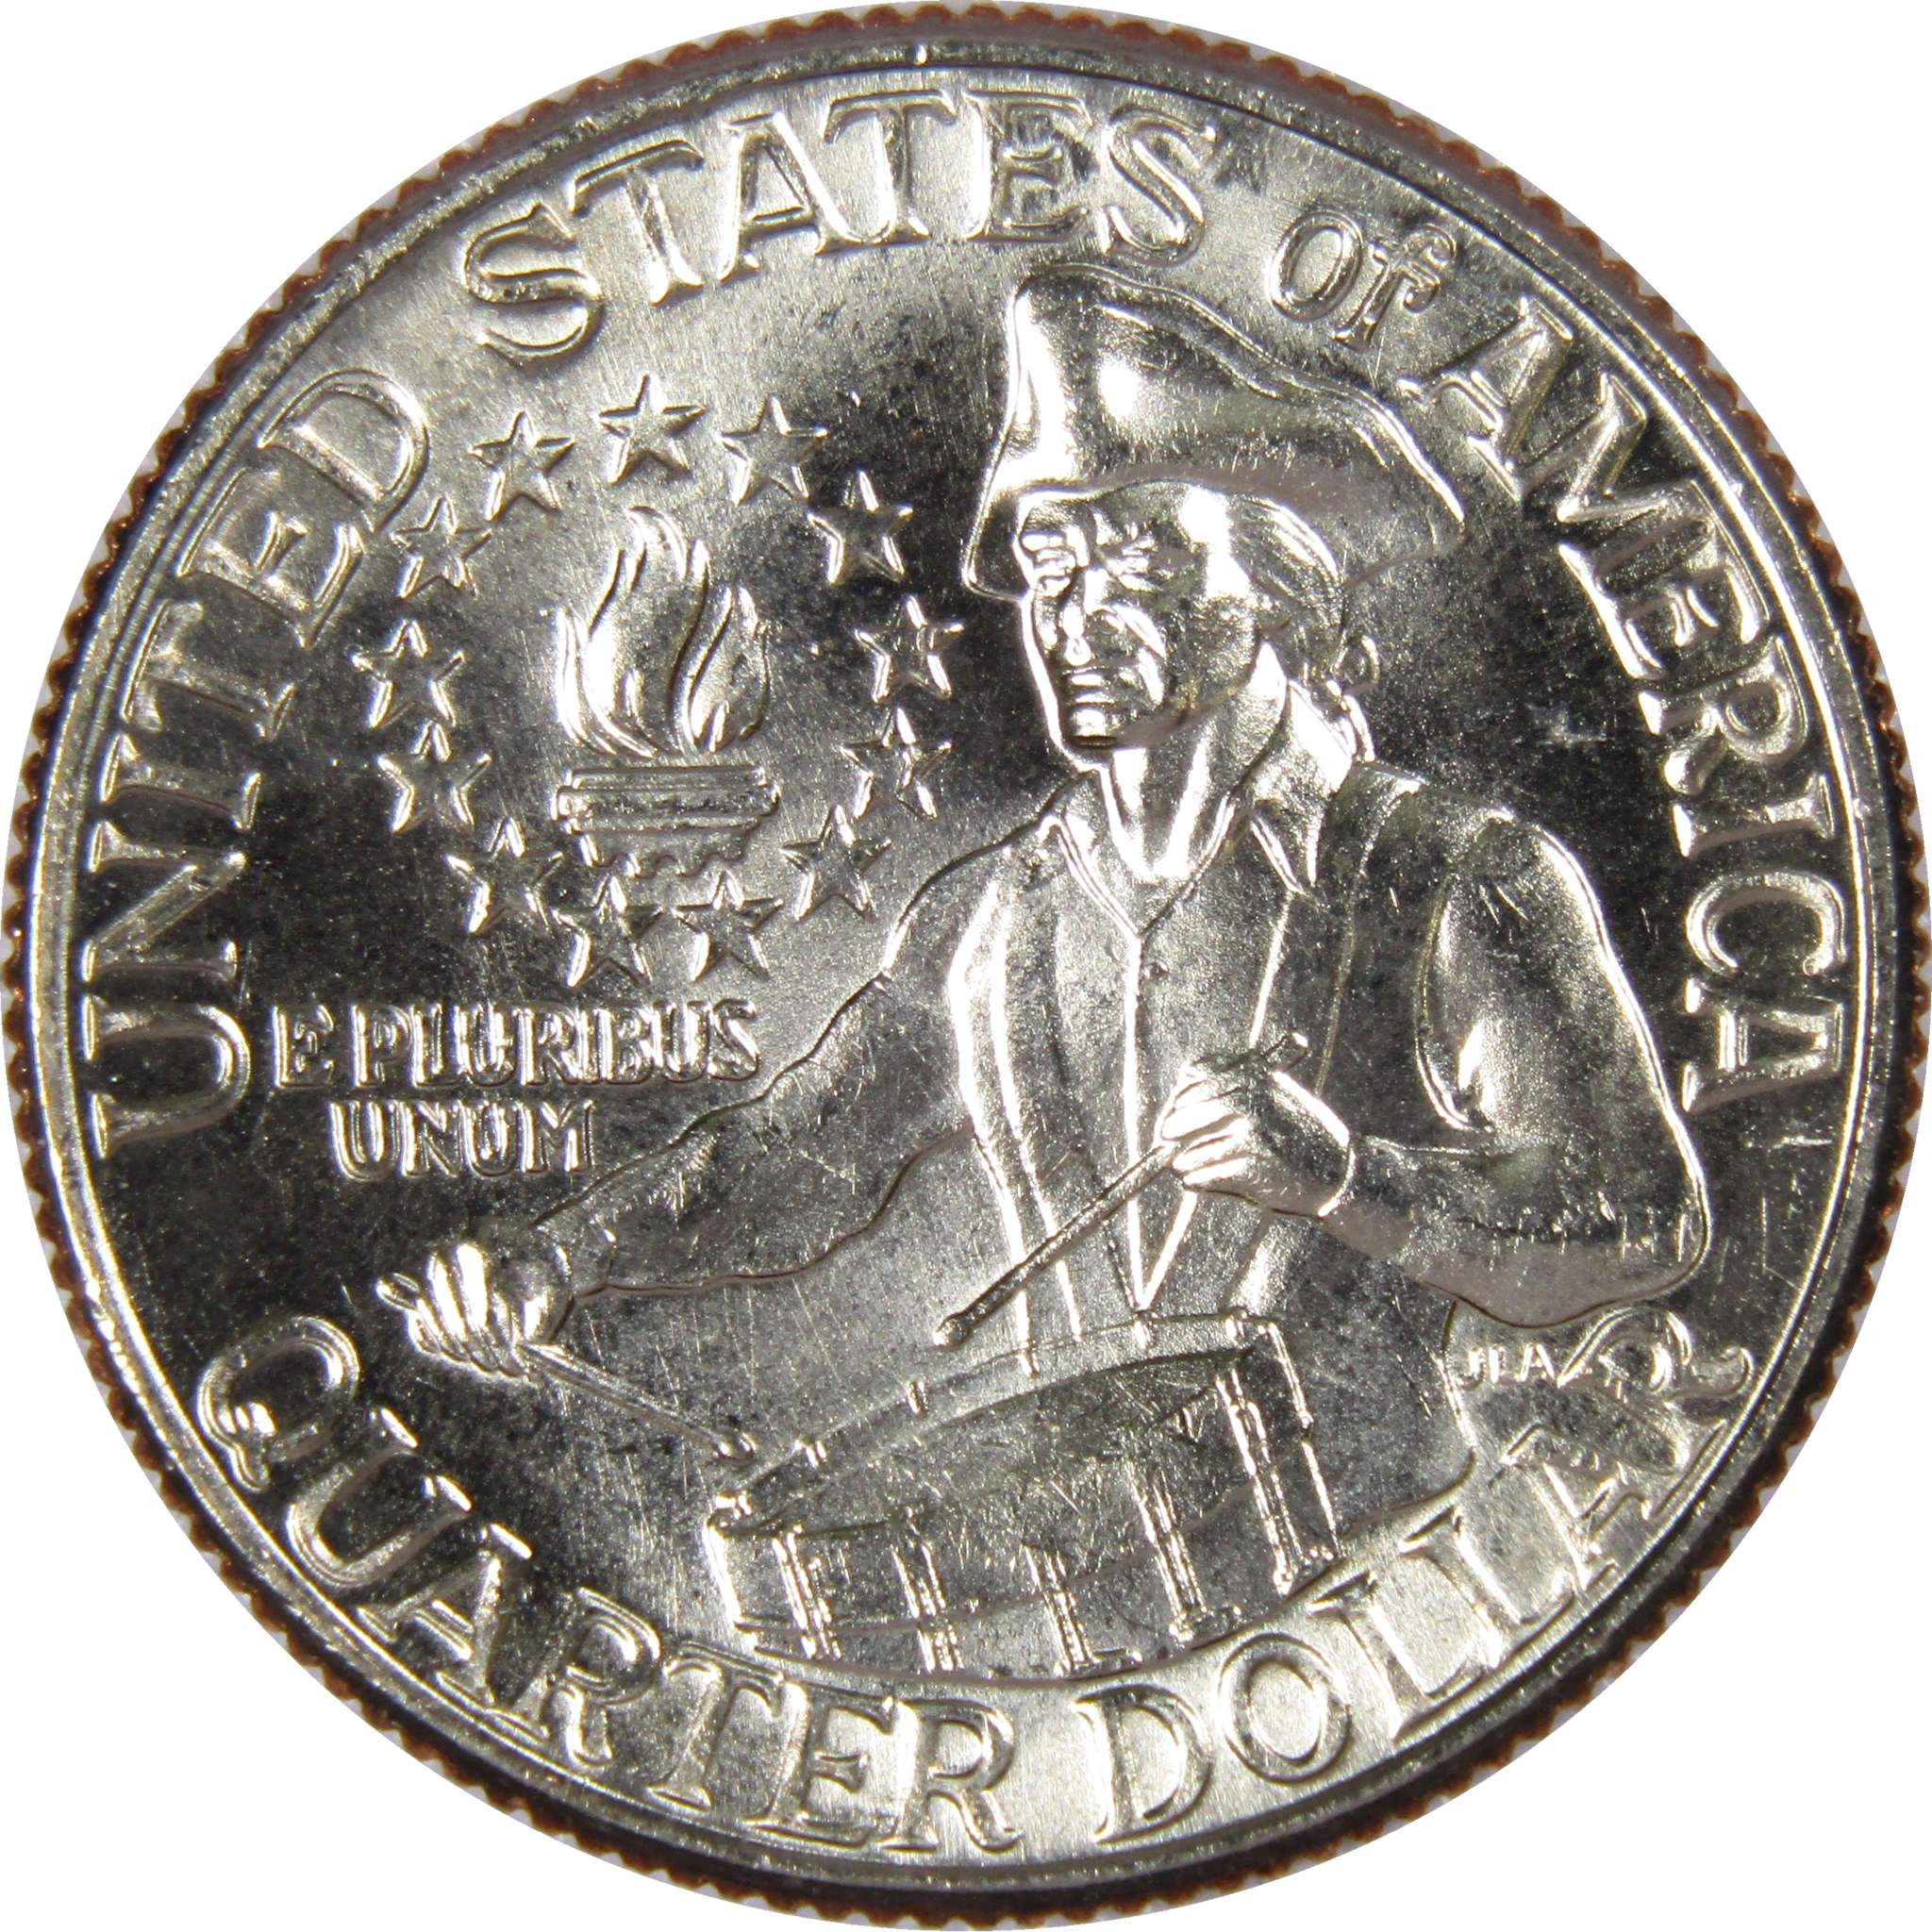 1976 D Washington Bicentennial Quarter BU Uncirculated Mint State 25c US Coin